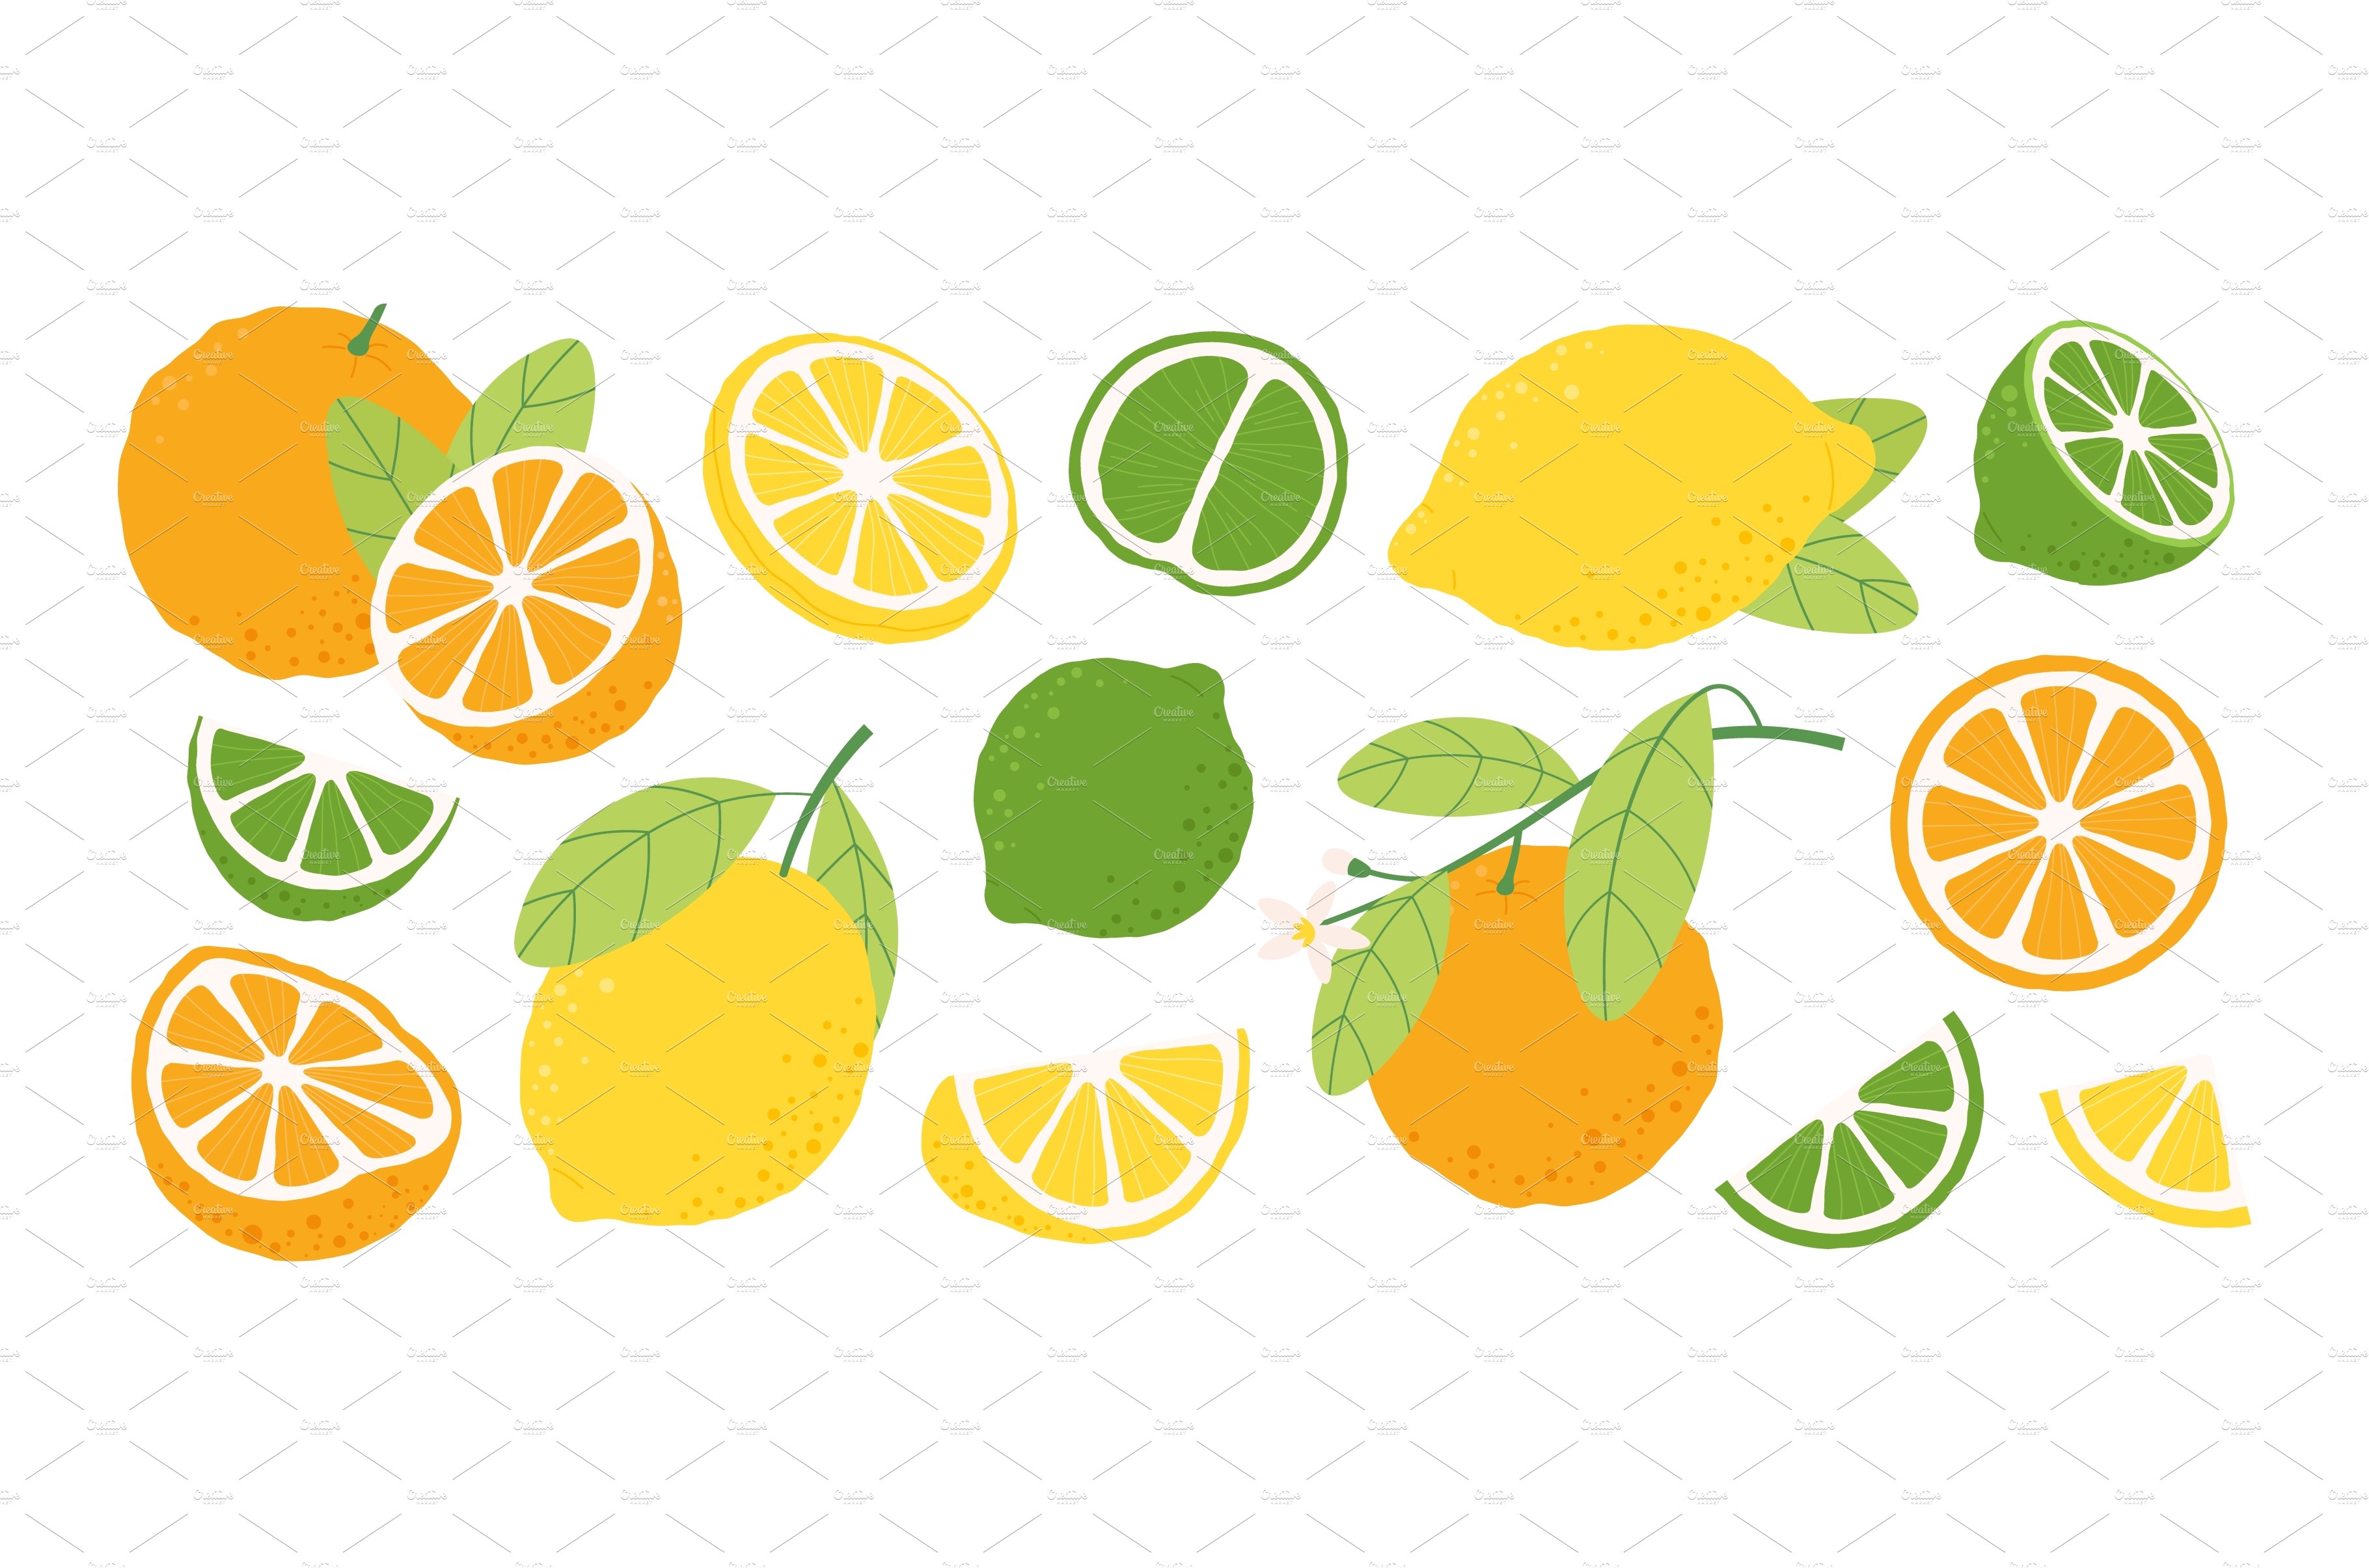 Oranges lemons fruits, lemon slice cover image.